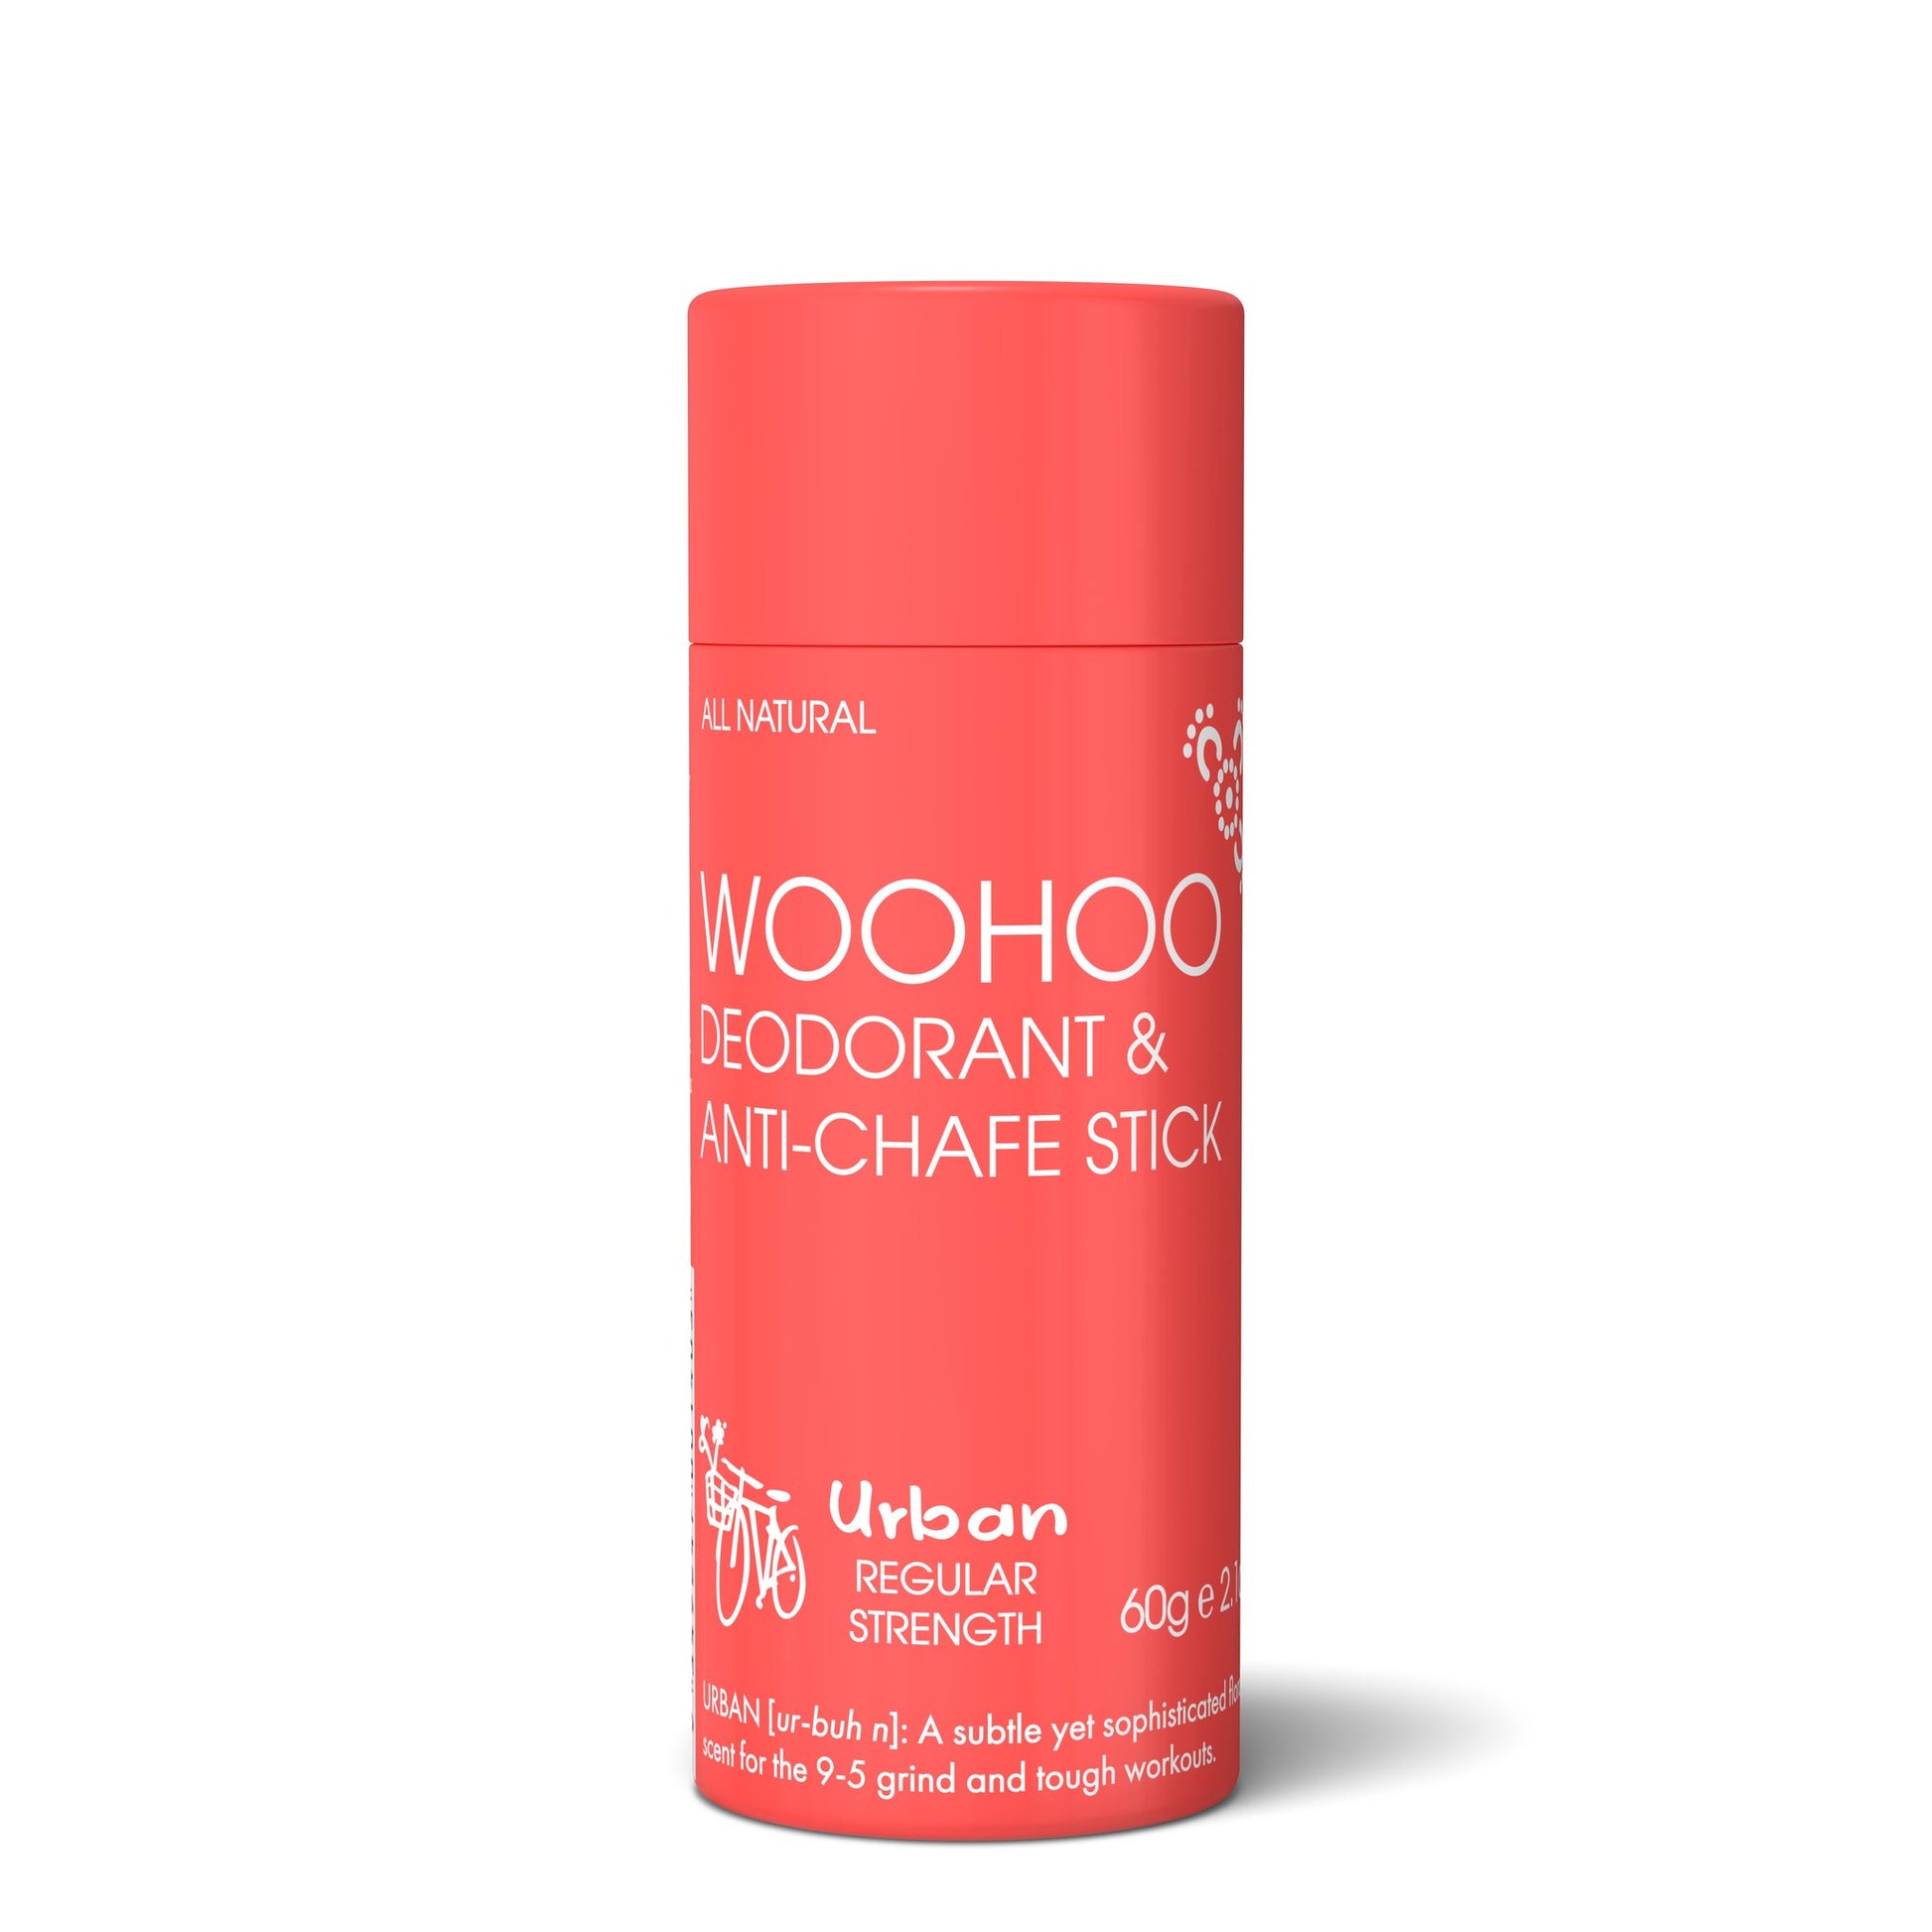 Woohoo Body Deodorant - Urban